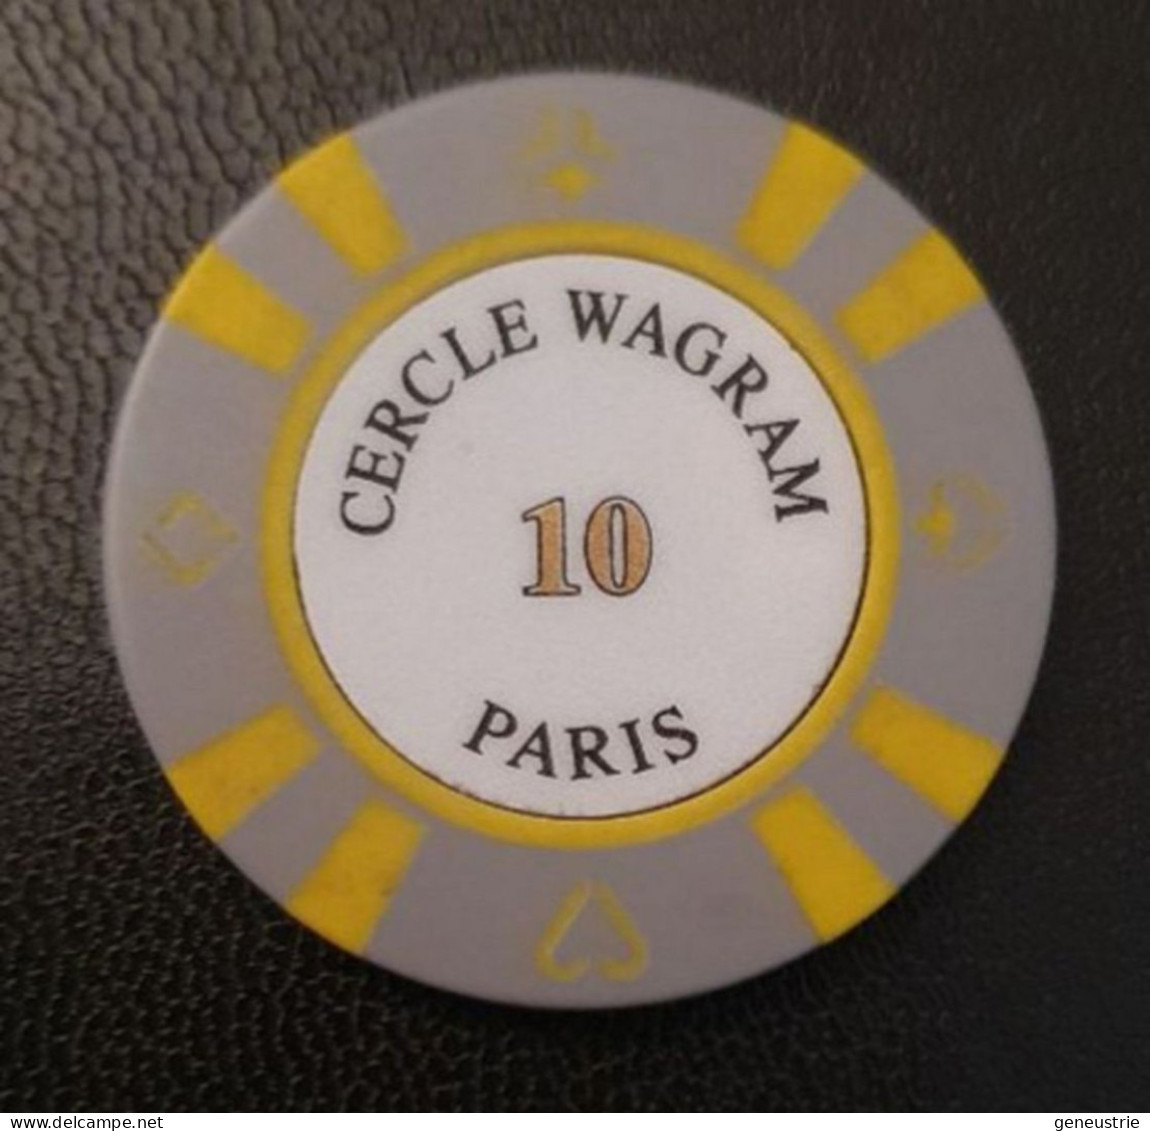 Rare Jeton De Cercle De Jeu Parisien "10 (€) Cercle Wagram" Arc De Triomphe - Casino Token - Jeton De Casino - Casino